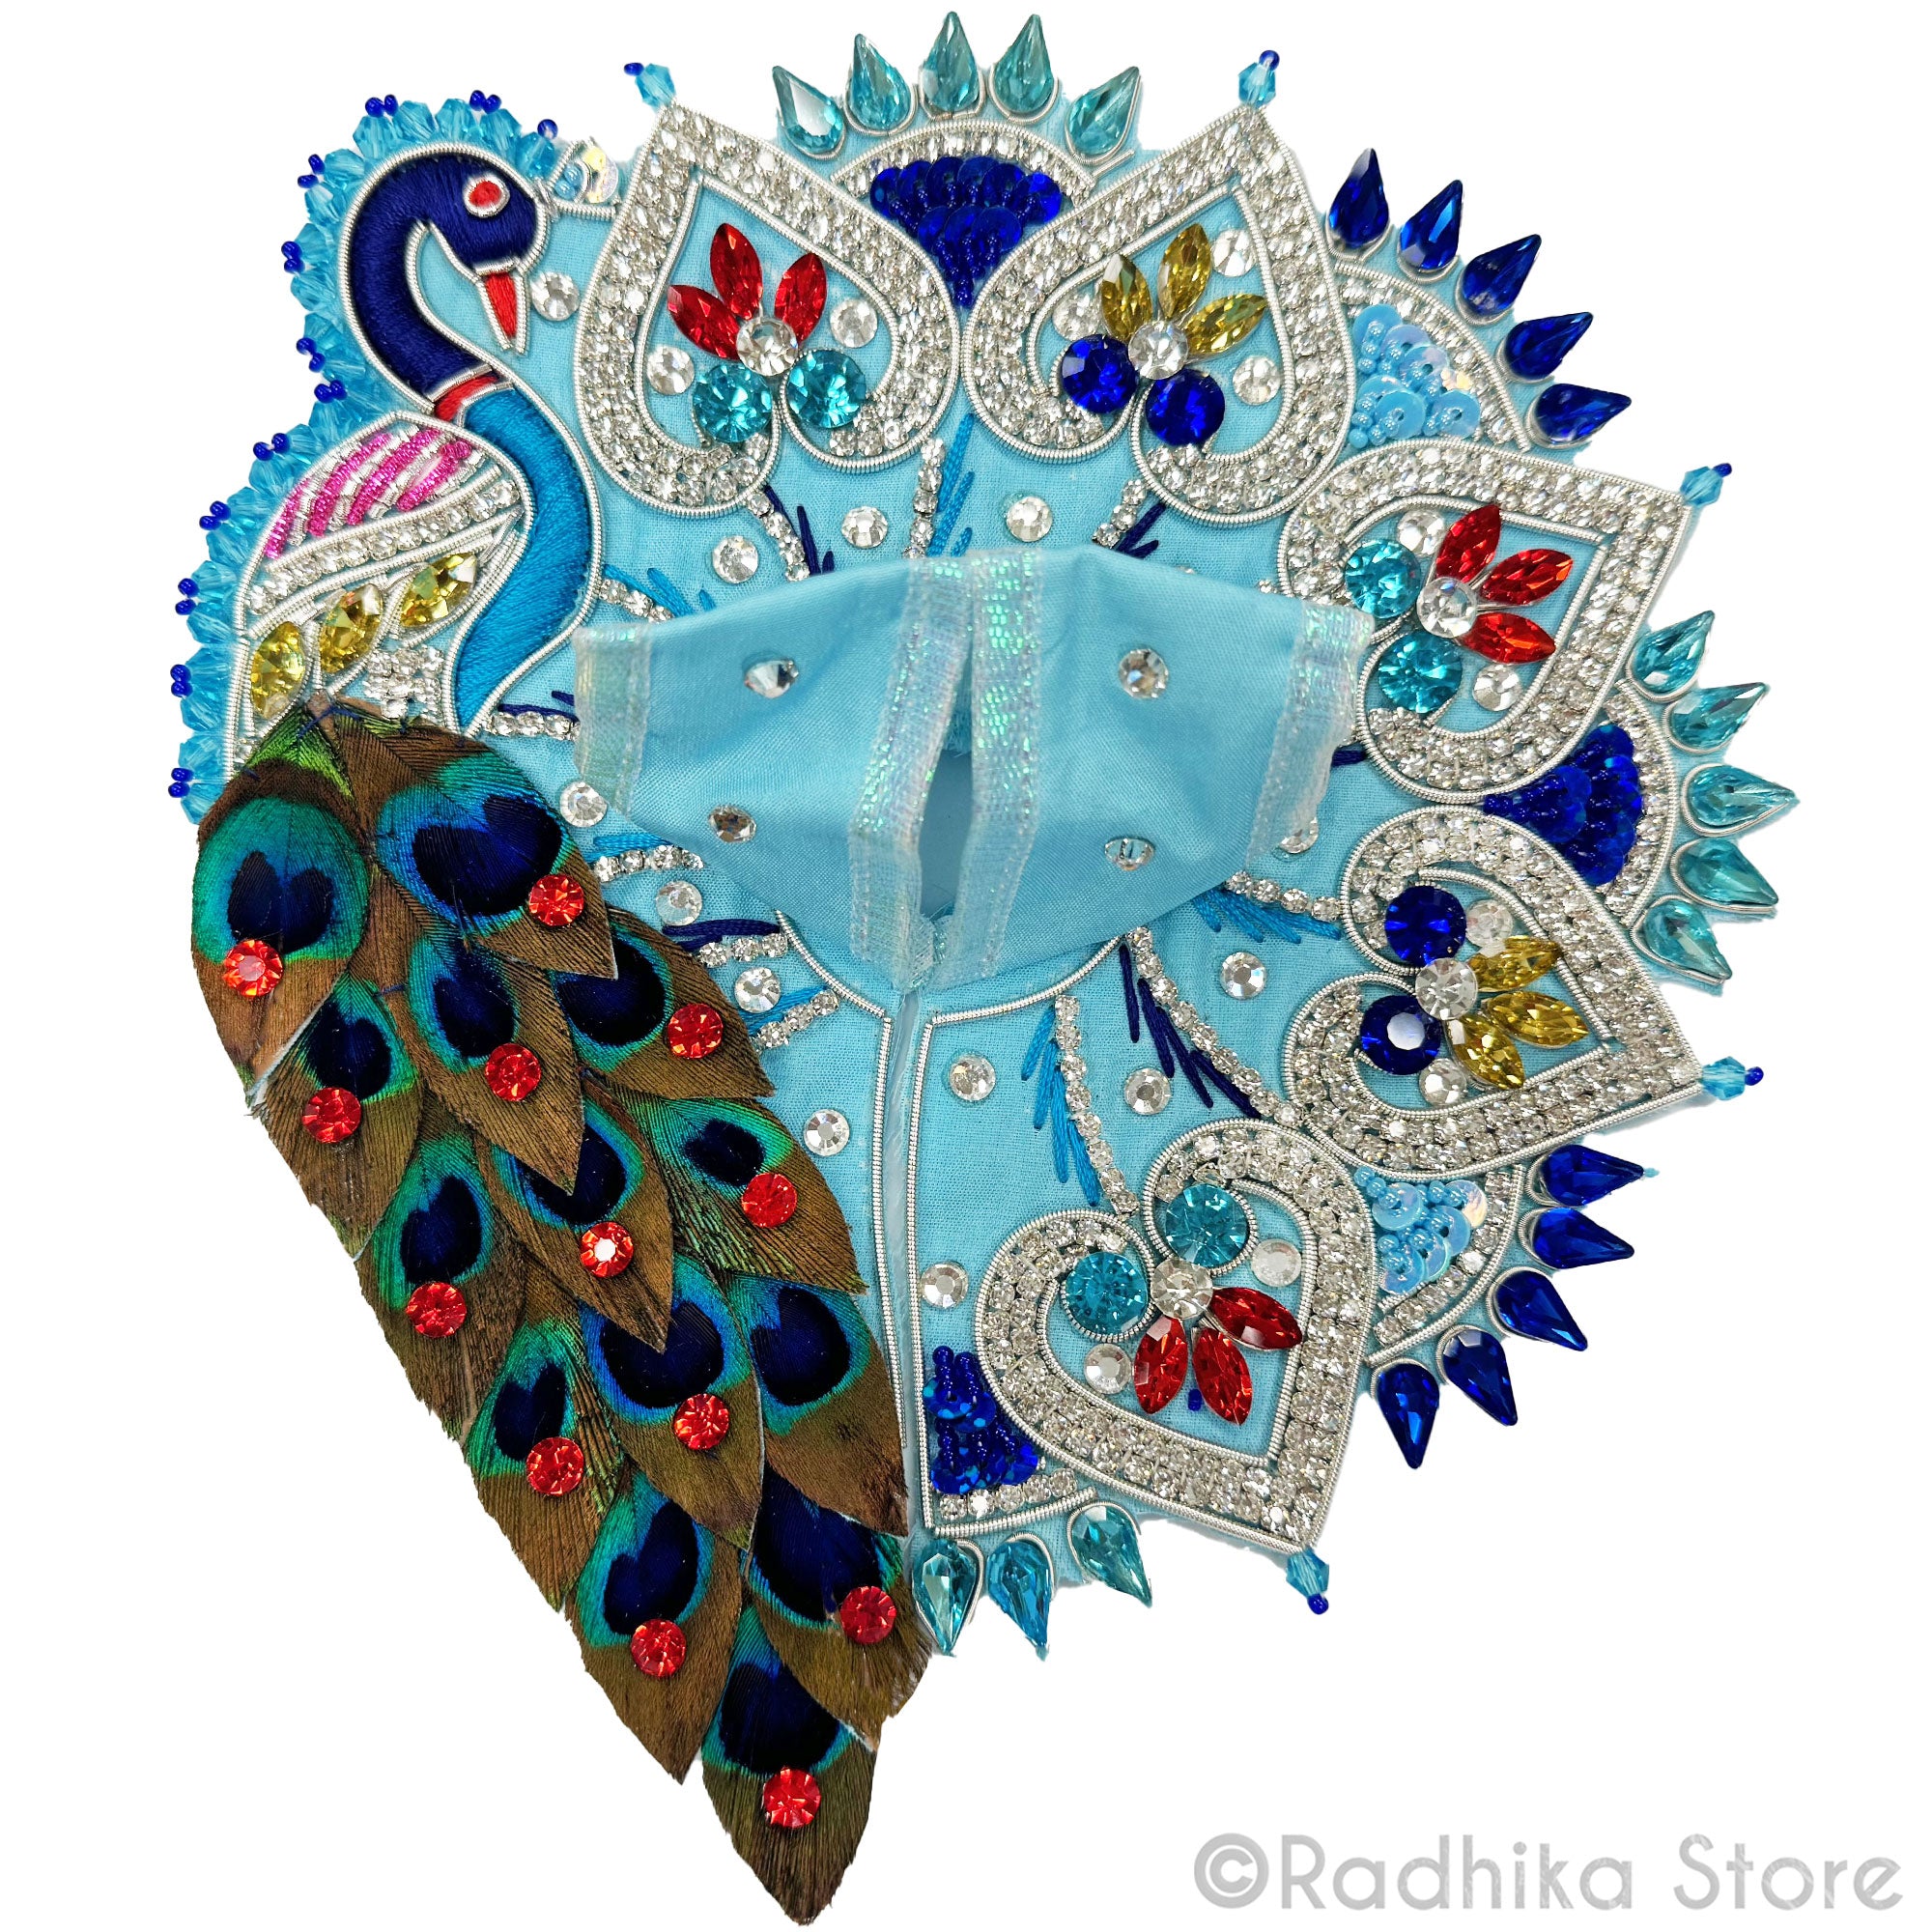 Gopal's Peacock - Sky Blue - Laddu Gopal Outfit